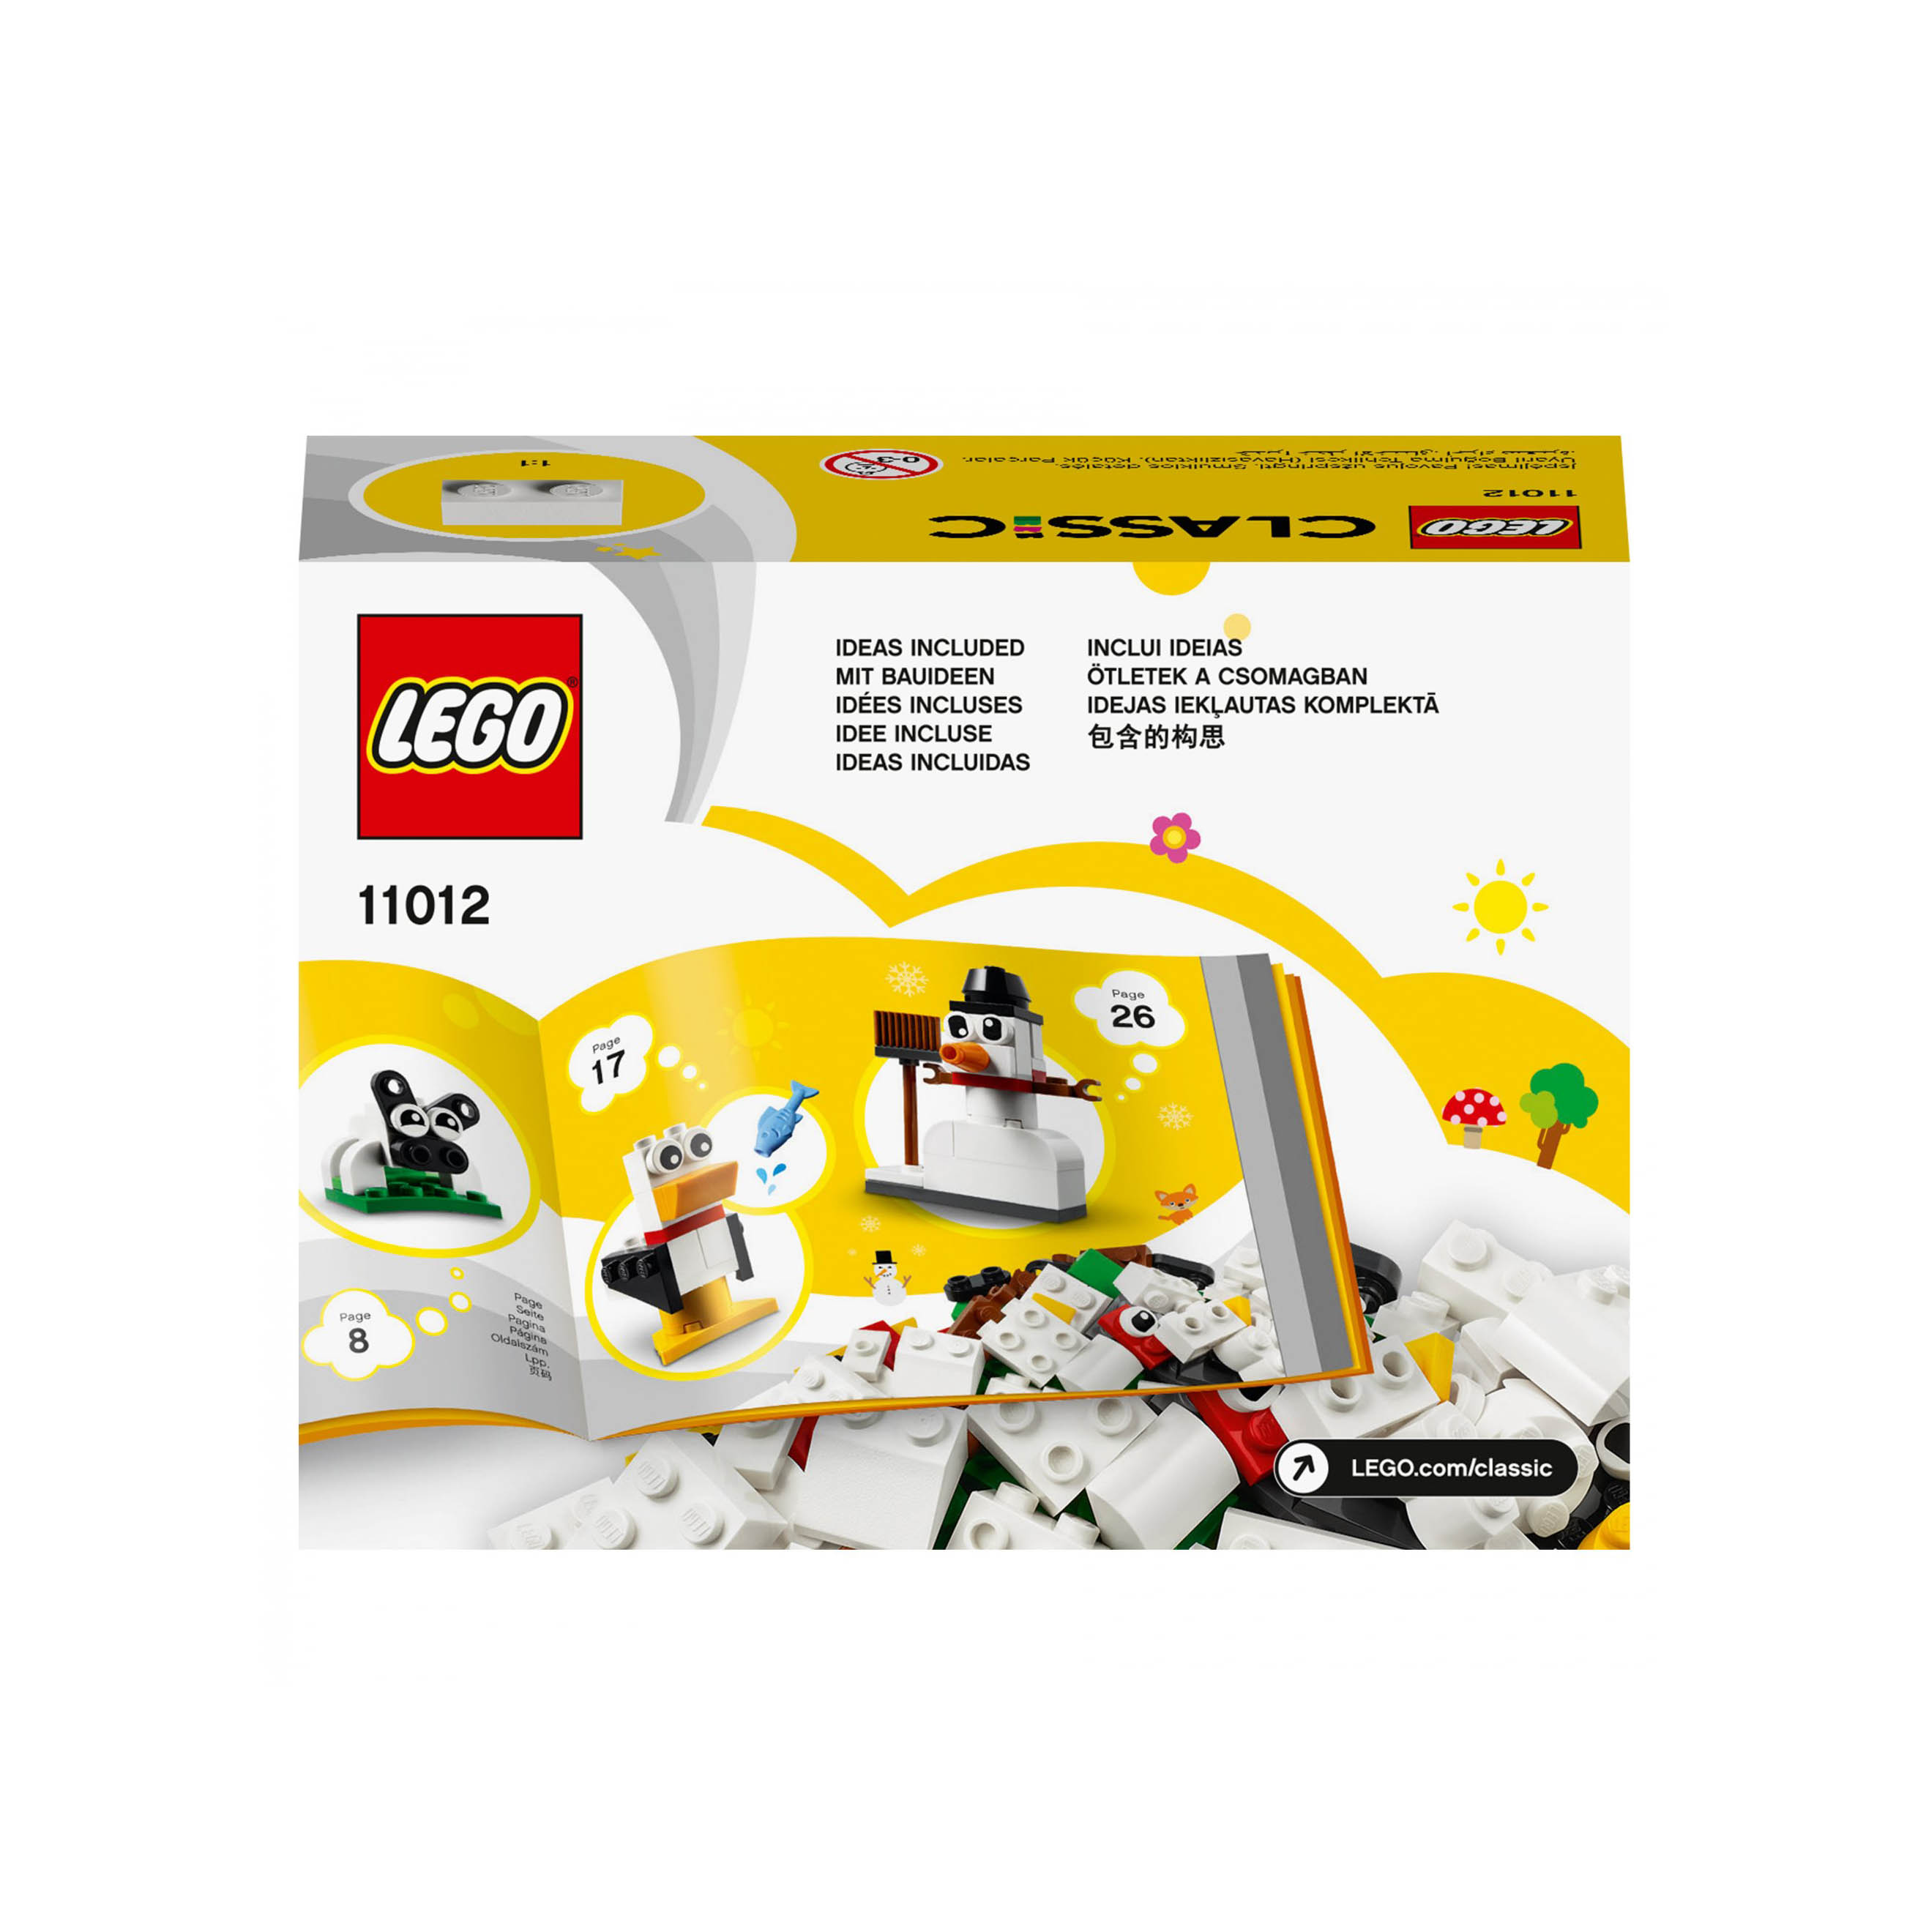 LEGO Classic Mattoncini Bianchi Creativi, Set di Costruzioni per Bambini 4 Anni 11012, , large